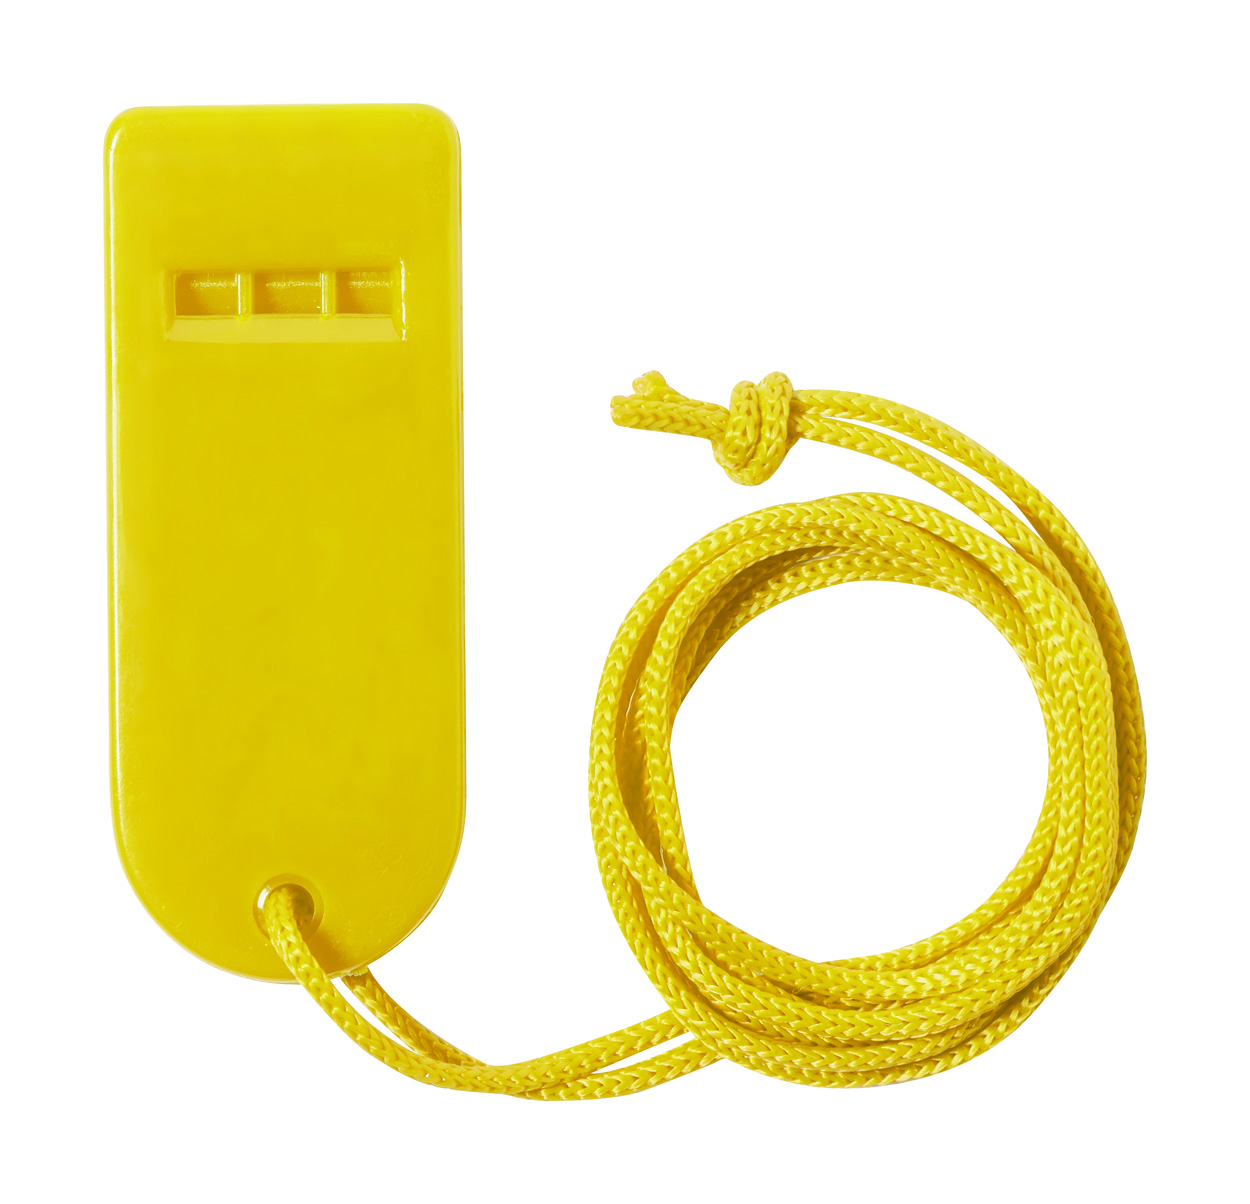 Forlong whistle - yellow